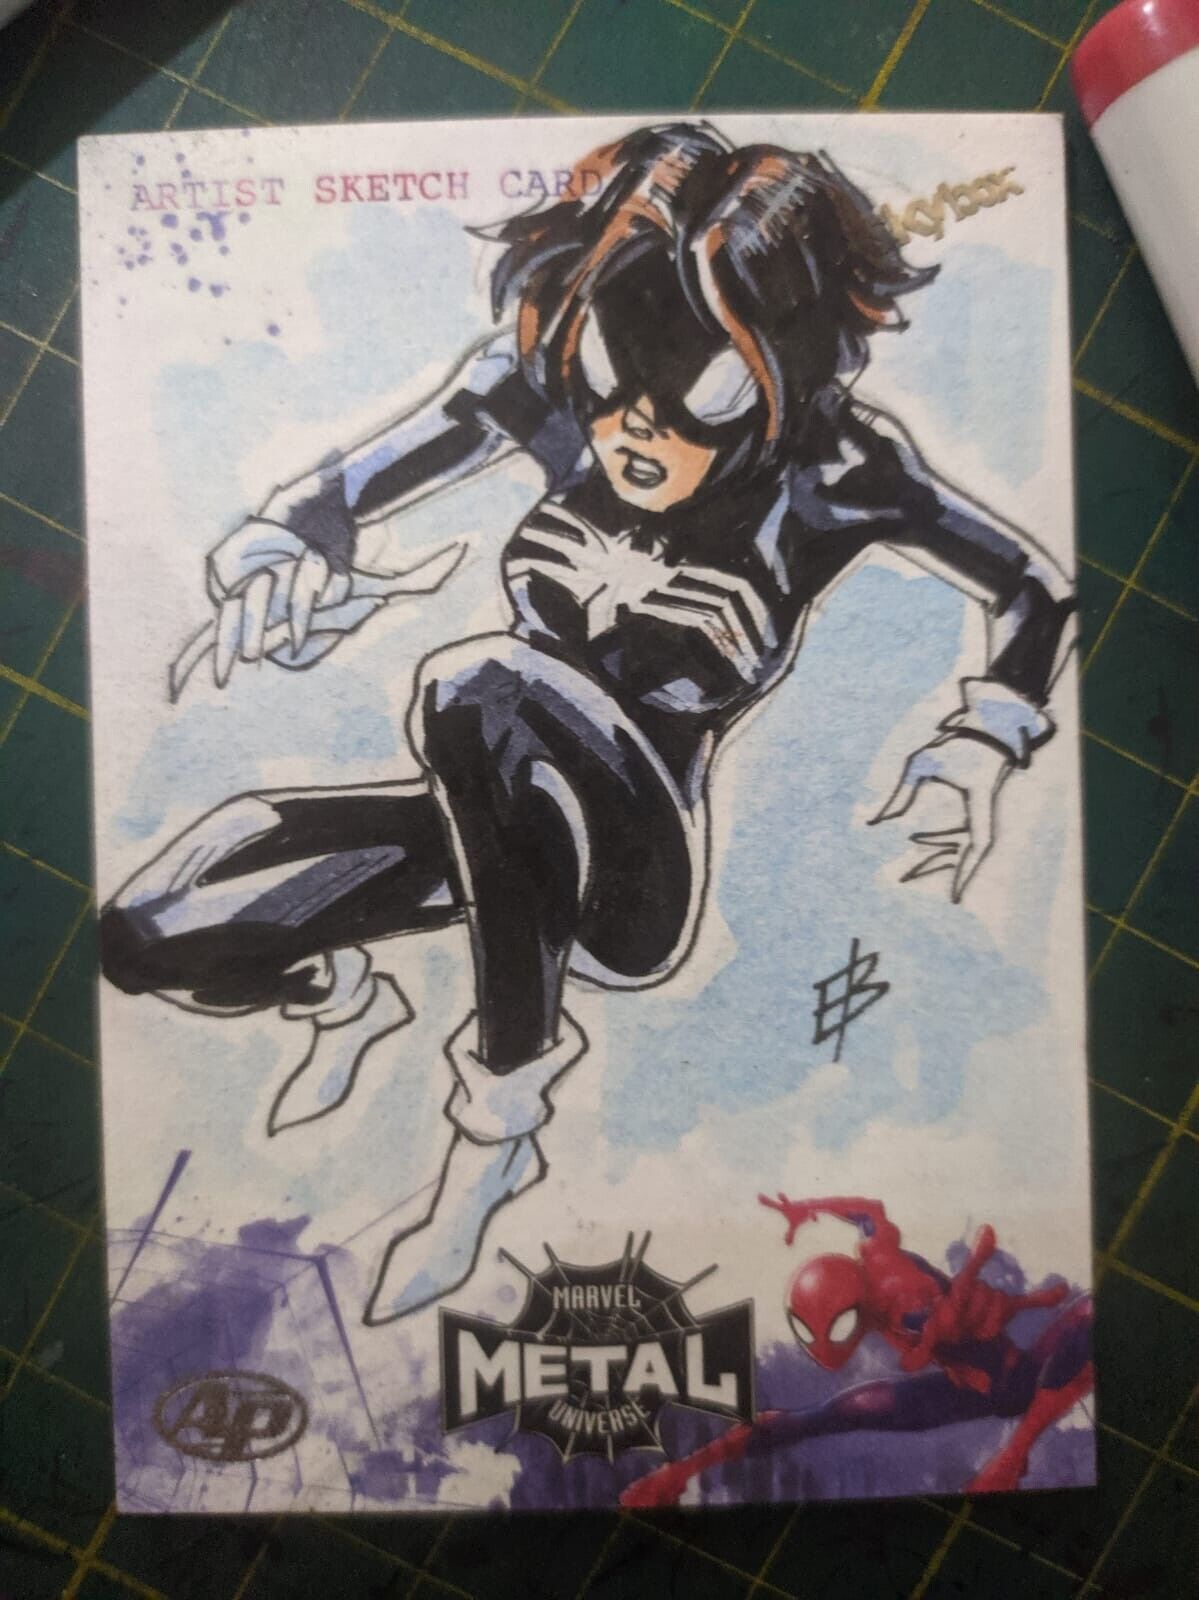 2021 Upper Deck Metal Universe Sketch Card - Spider-Woman  1/1 - by Ed Bilas